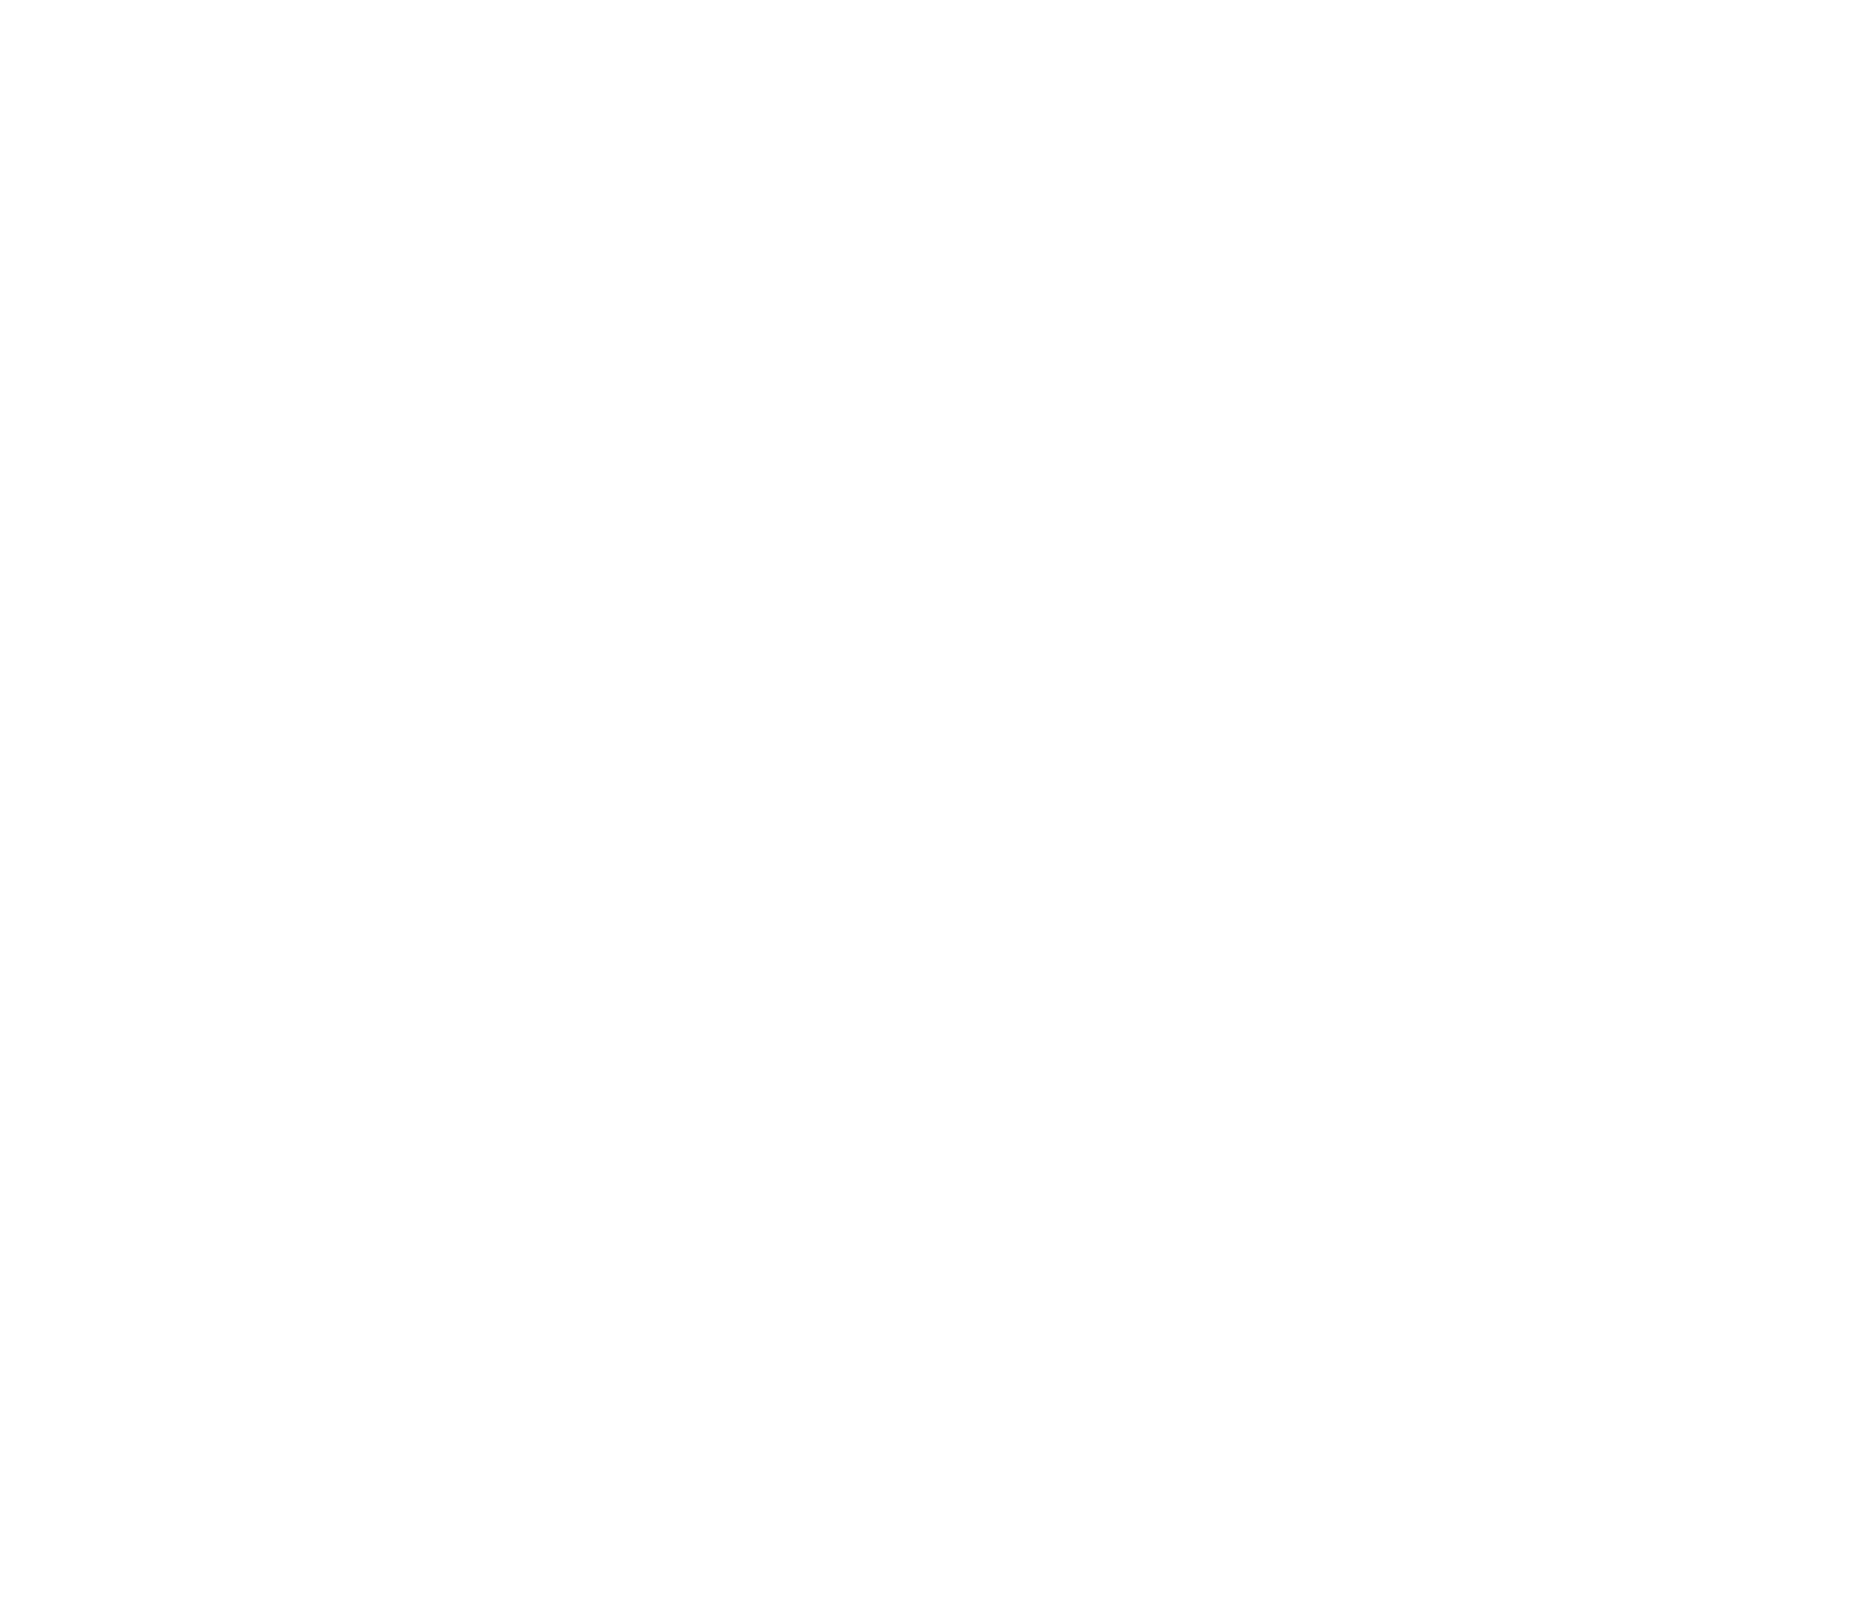 Create Hope in the World - Horizontal - White